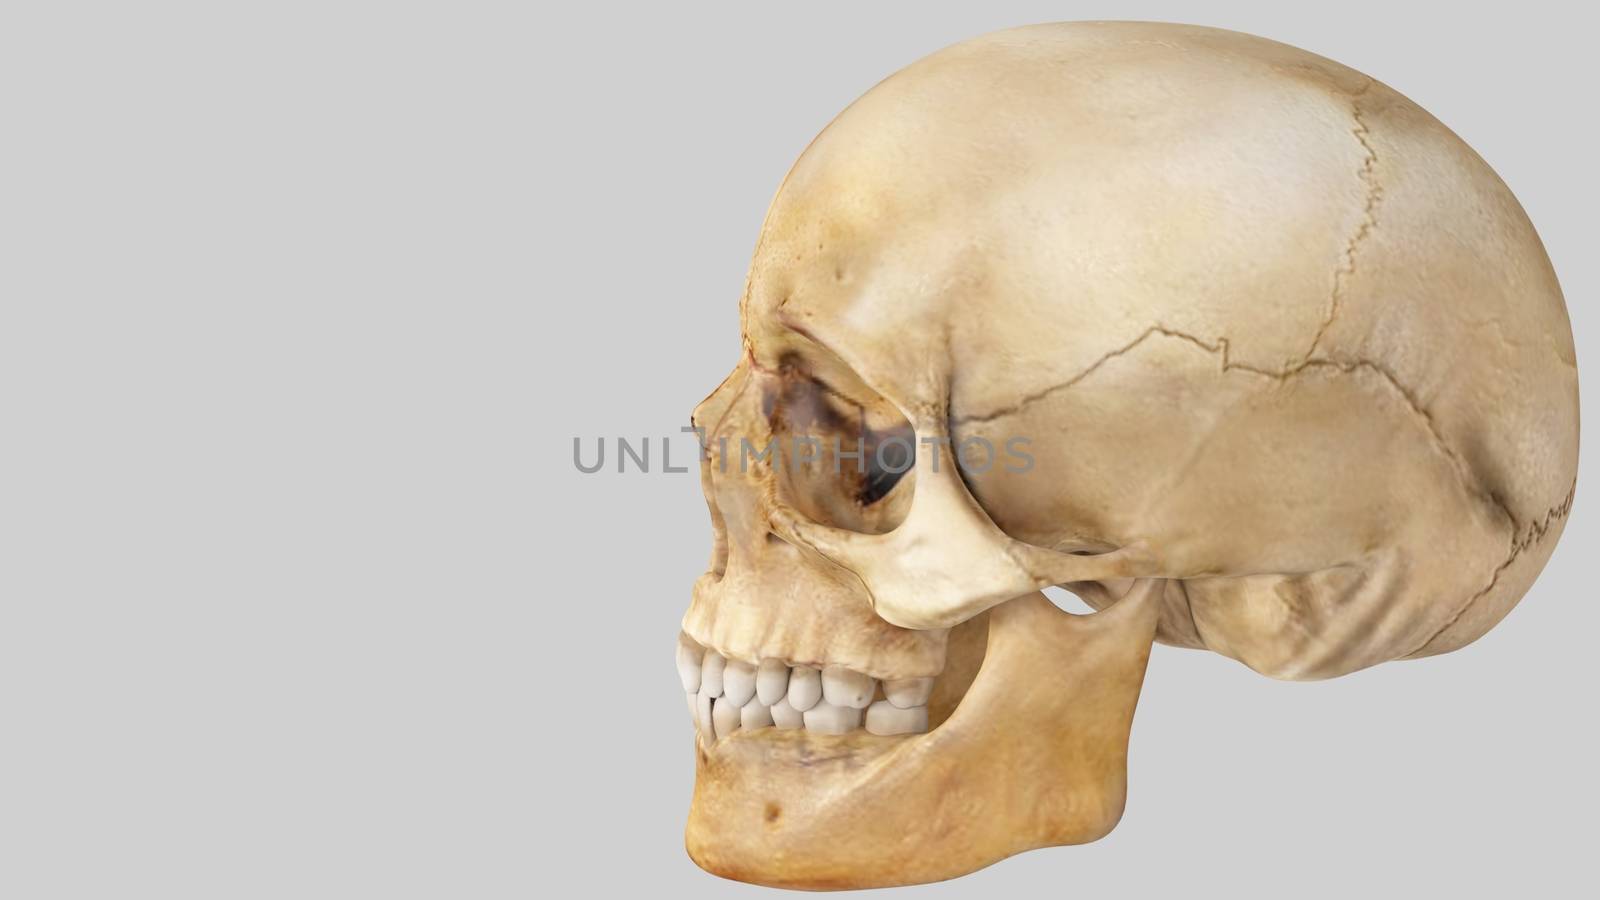 artifical human skull on white background, skull by Maharana777